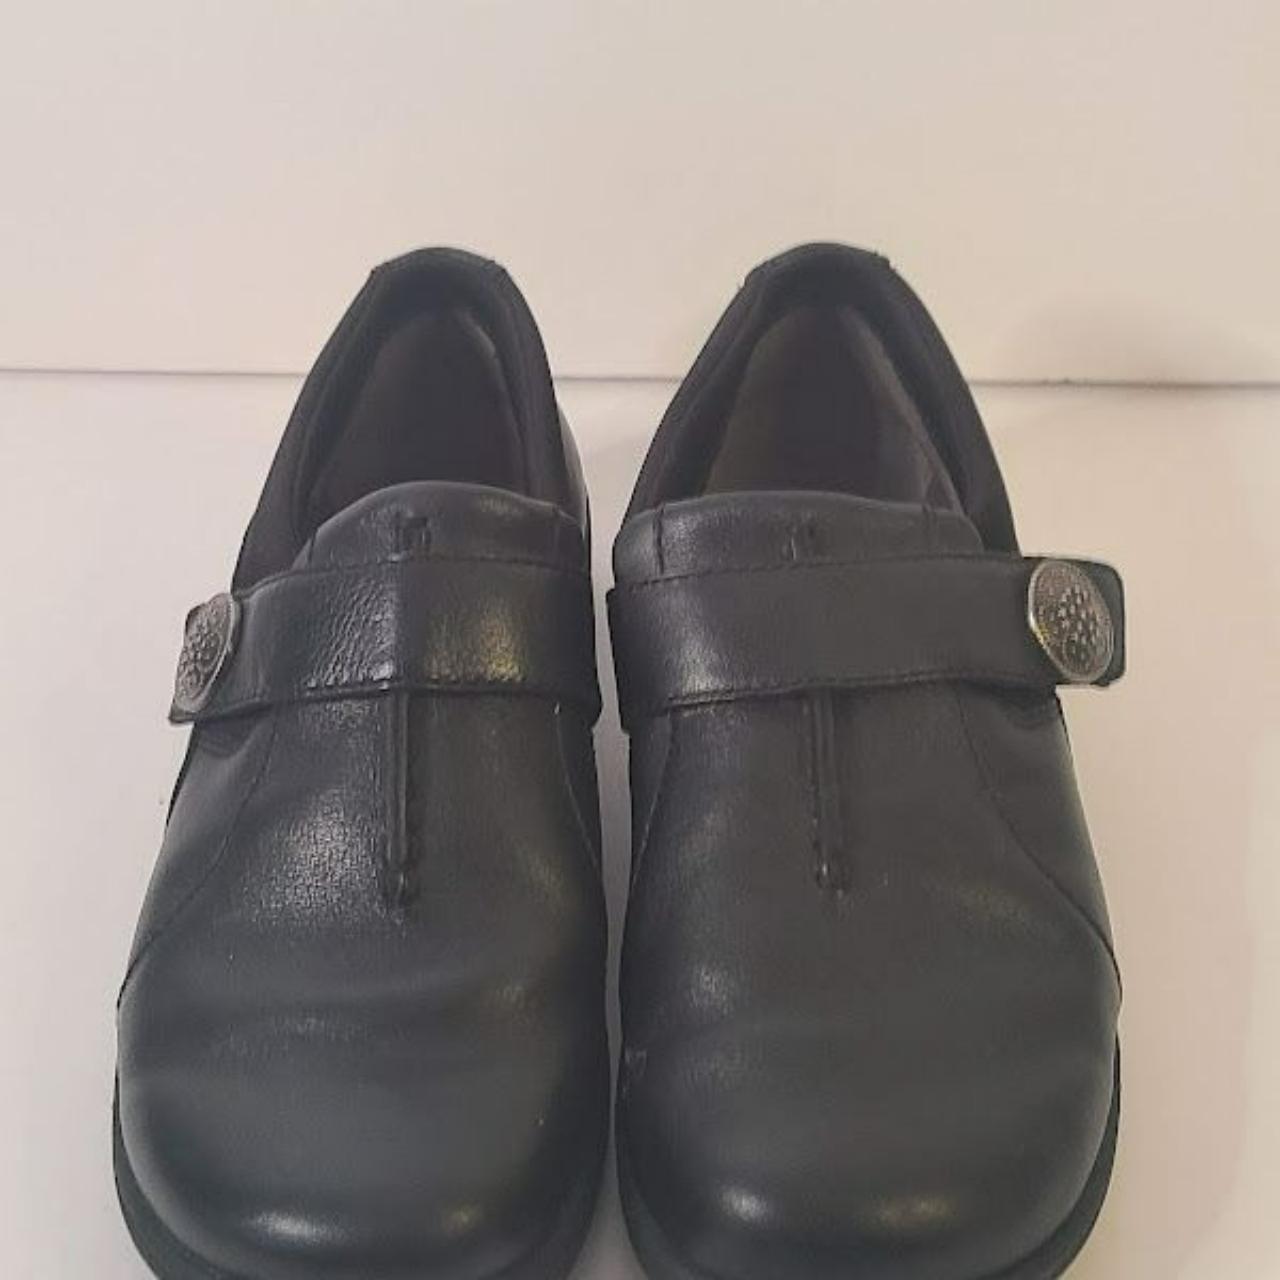 Abeo Black Leather Round Toe Slip On Oxford Shoes... - Depop